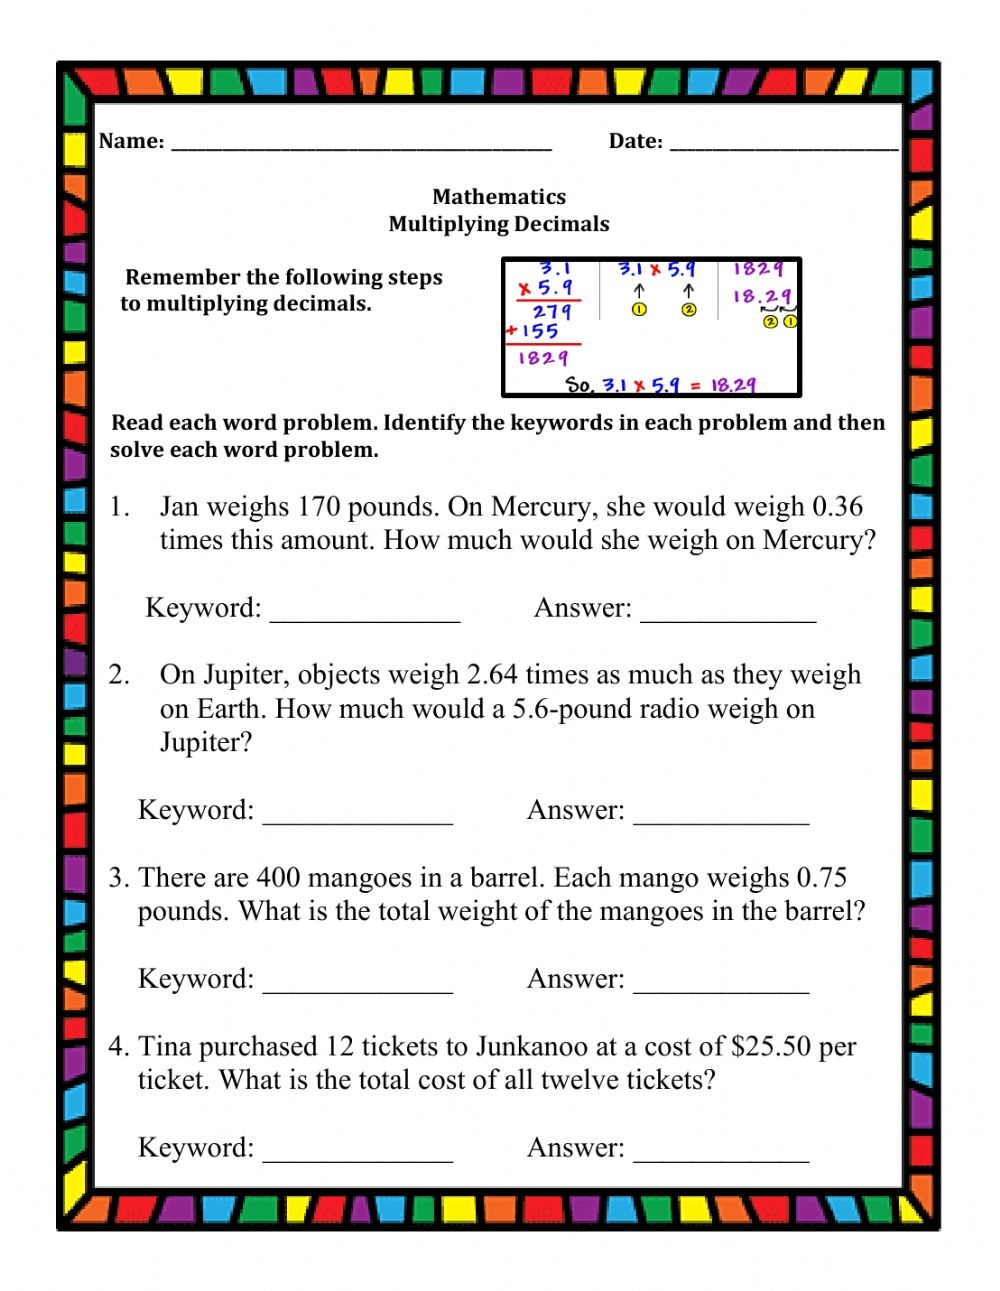 multiplying-decimals-story-problems-printable-worksheets